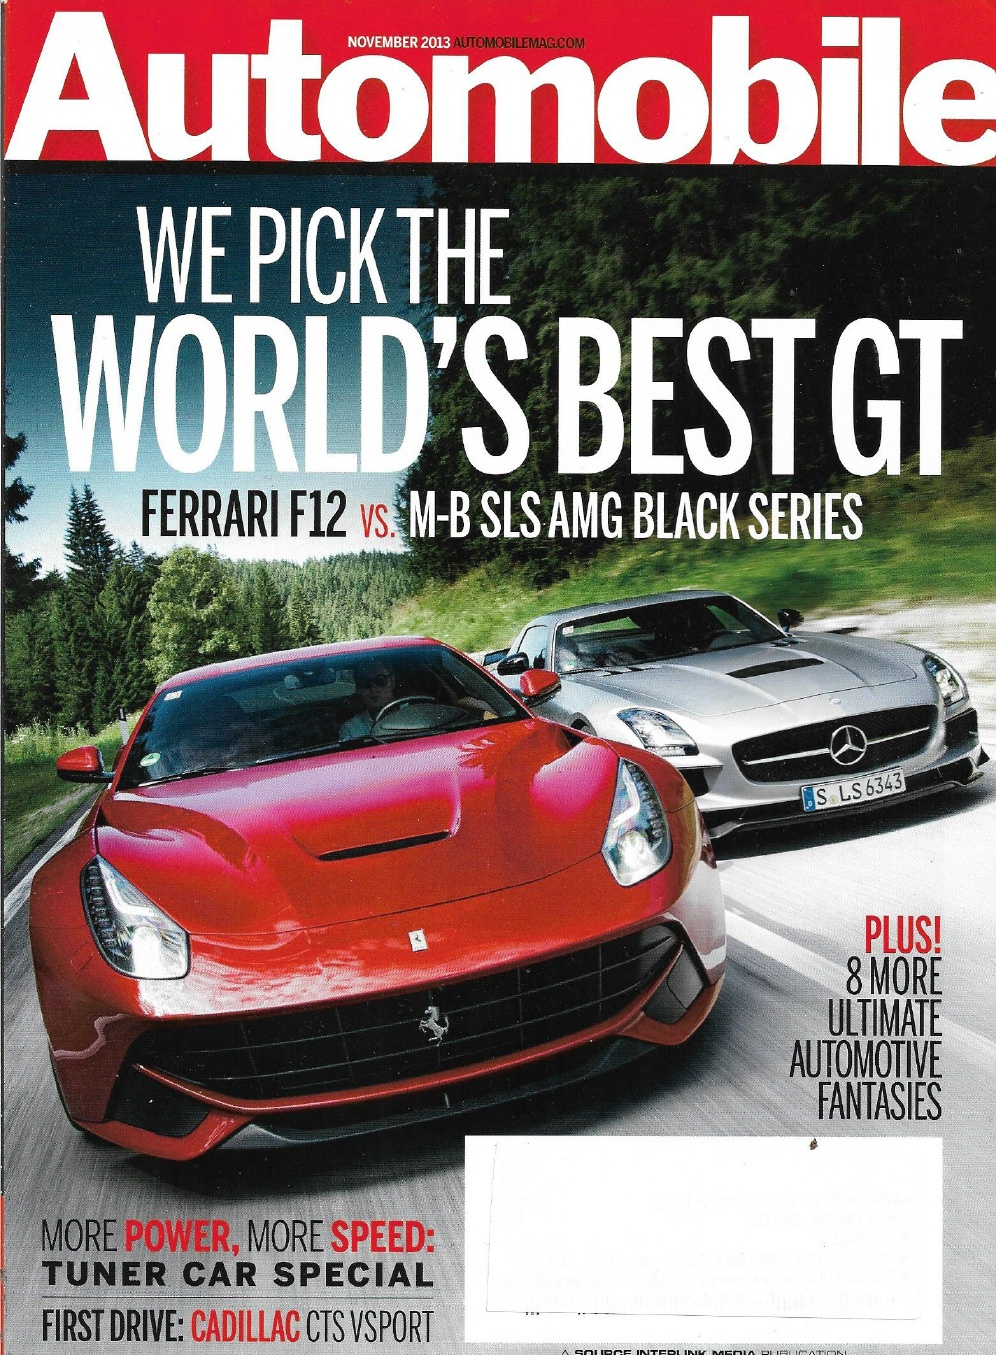 https://jimsmegamagazines.com/images/products/Automobile/Automobile_Magazine-2013-11-1.jpg